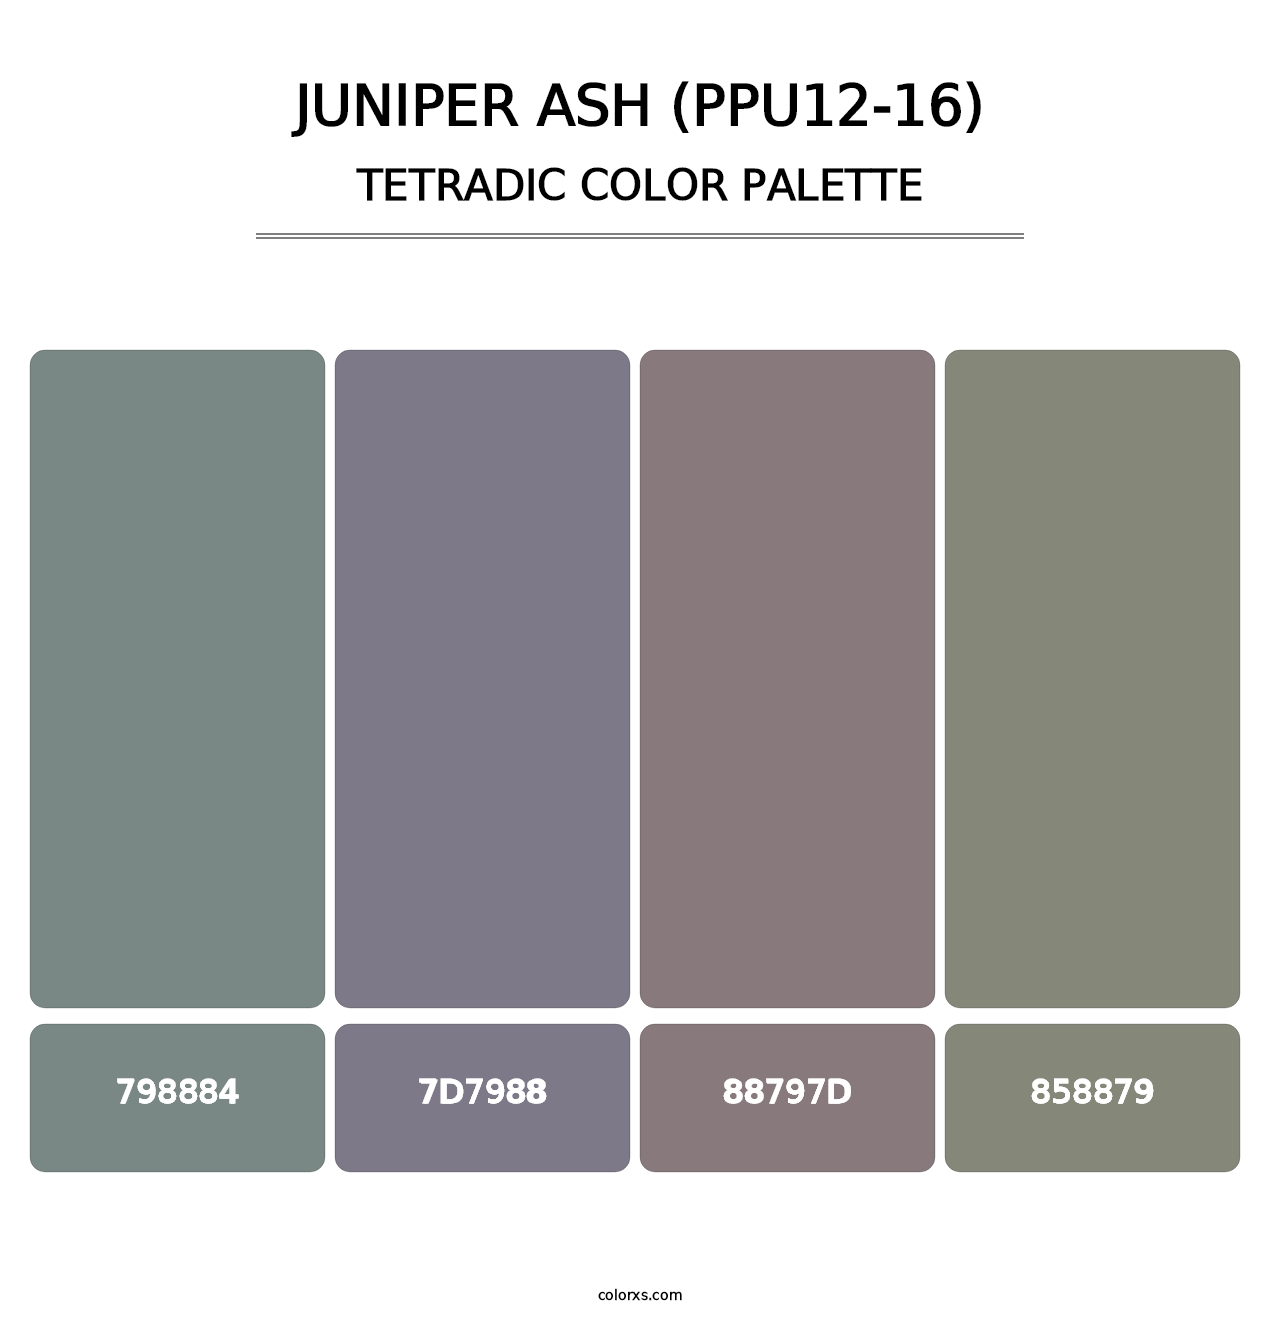 Juniper Ash (PPU12-16) - Tetradic Color Palette